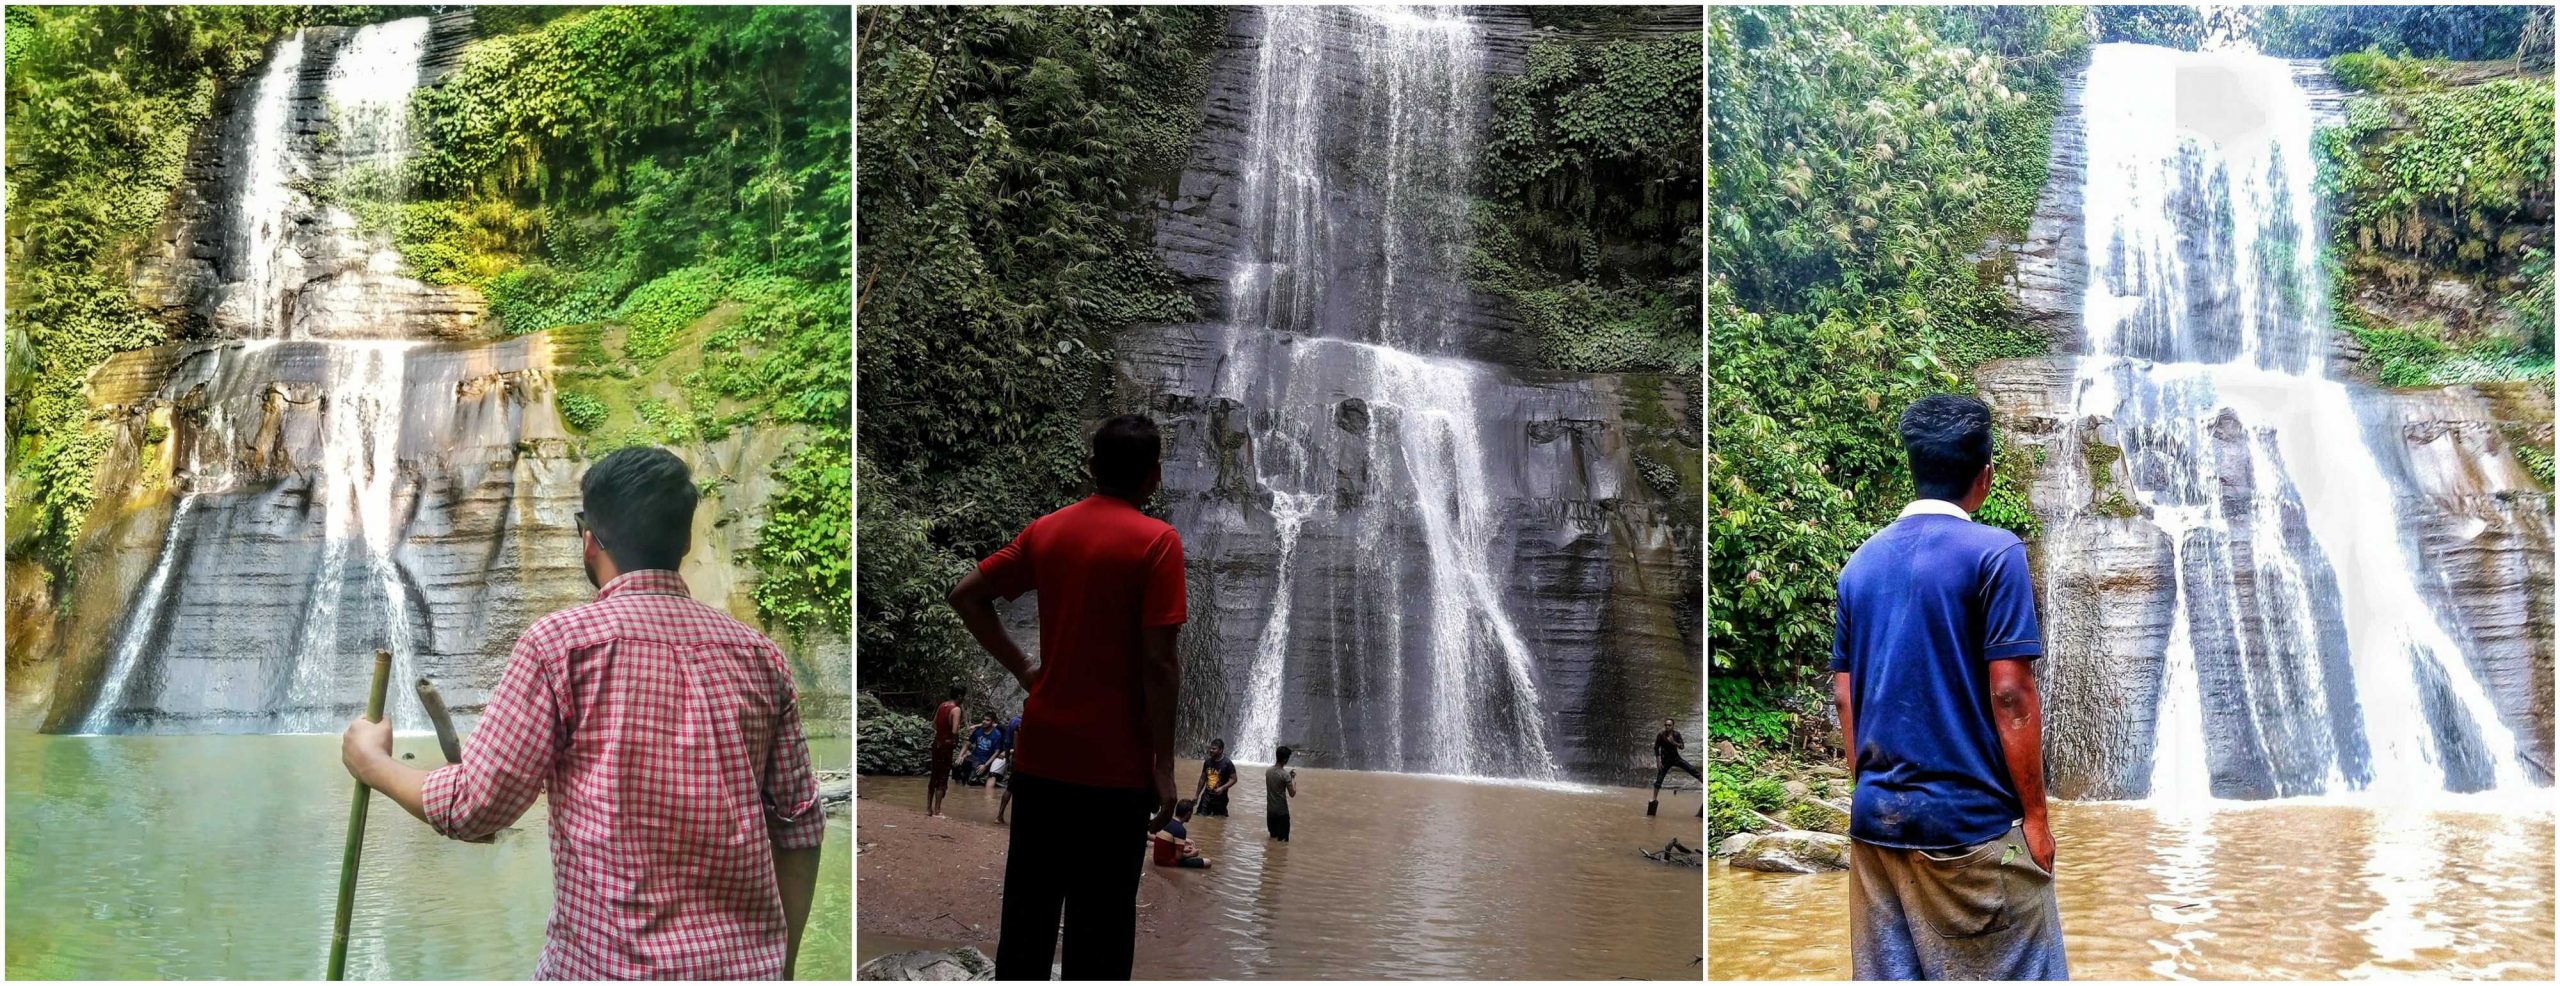 Boys are enjoying the natural beauty of Hum hum Waterfall